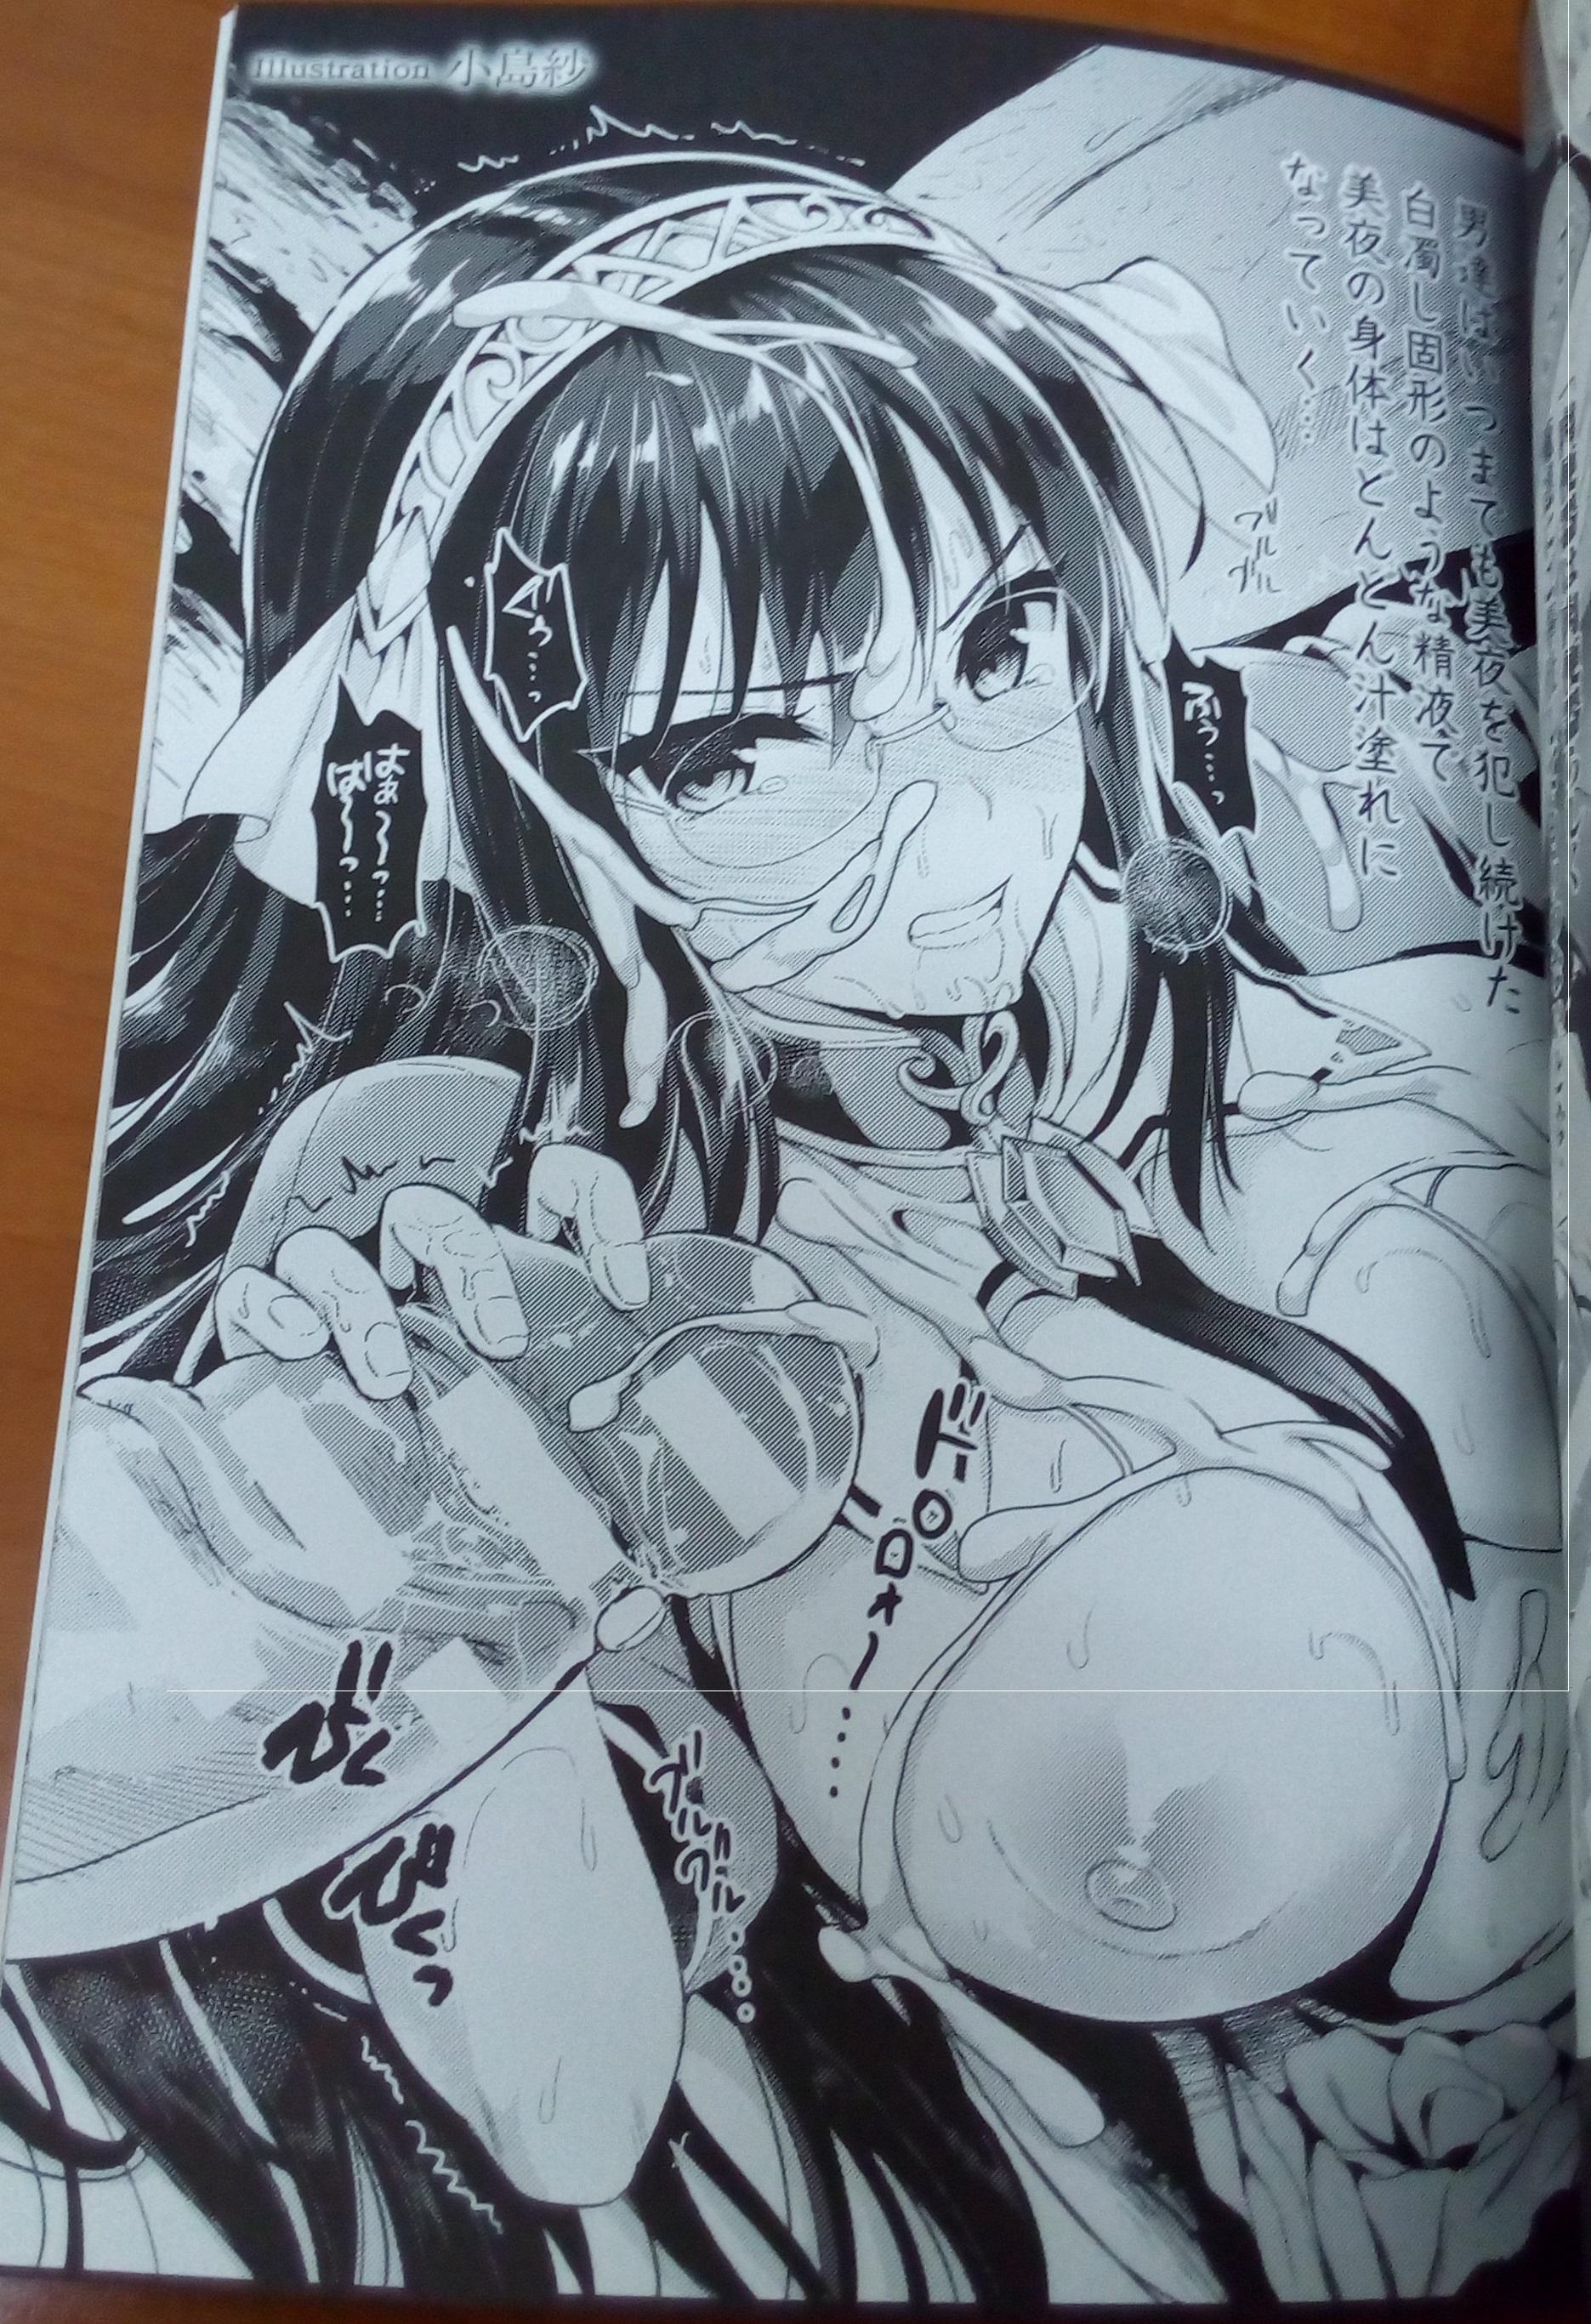 [Erect Sawaru] Shinkyoku no Grimoire III -PANDRA saga 2nd story-  Append book [Photoed] 44